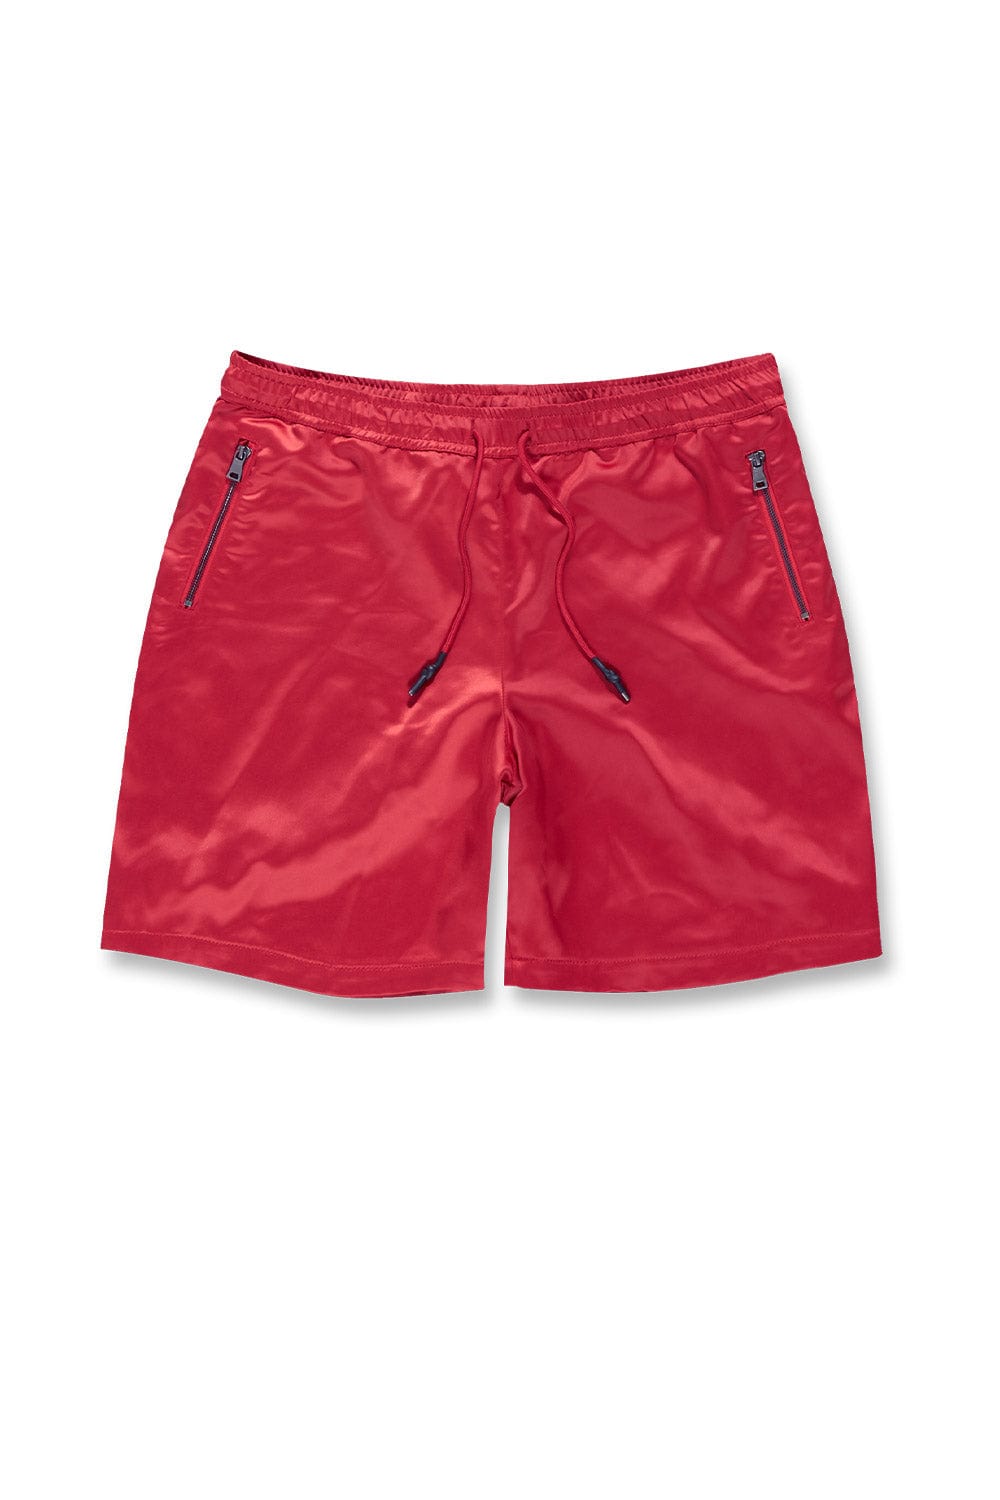 Jordan Craig Athletic - Lux Shorts Red / S